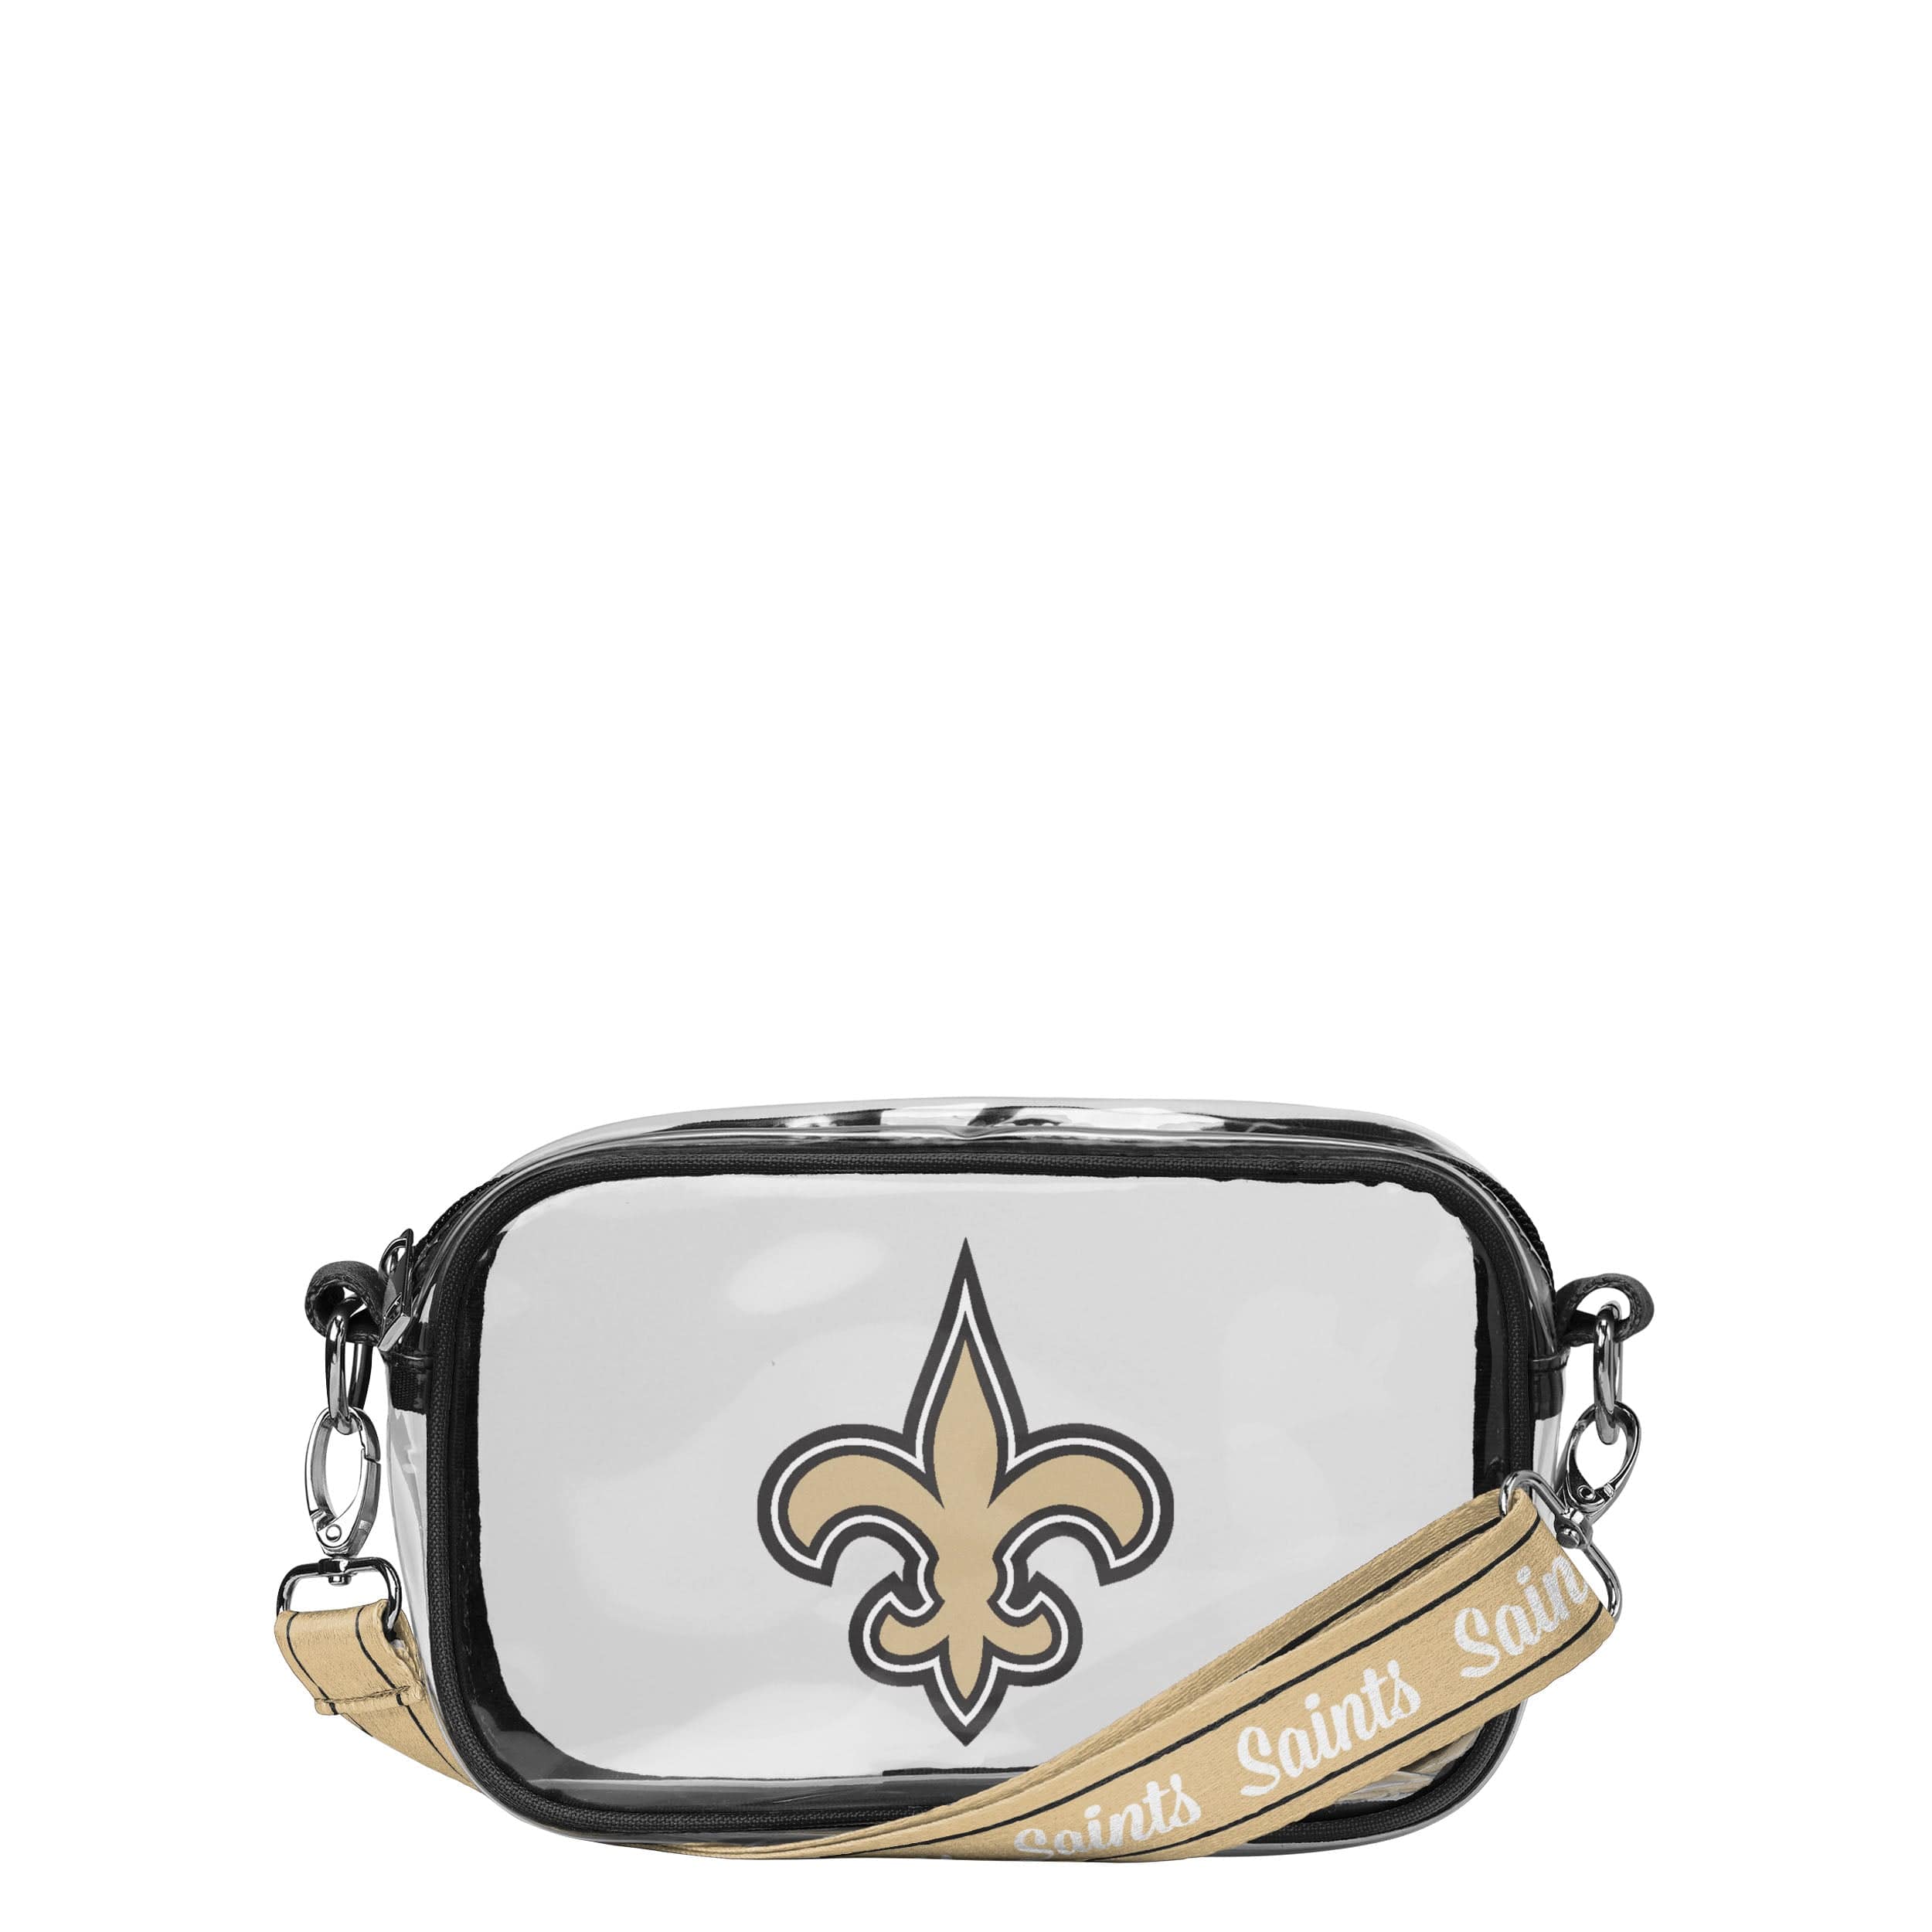 New Orleans Saints NFL 4 Pack Reusable Shopping Bags